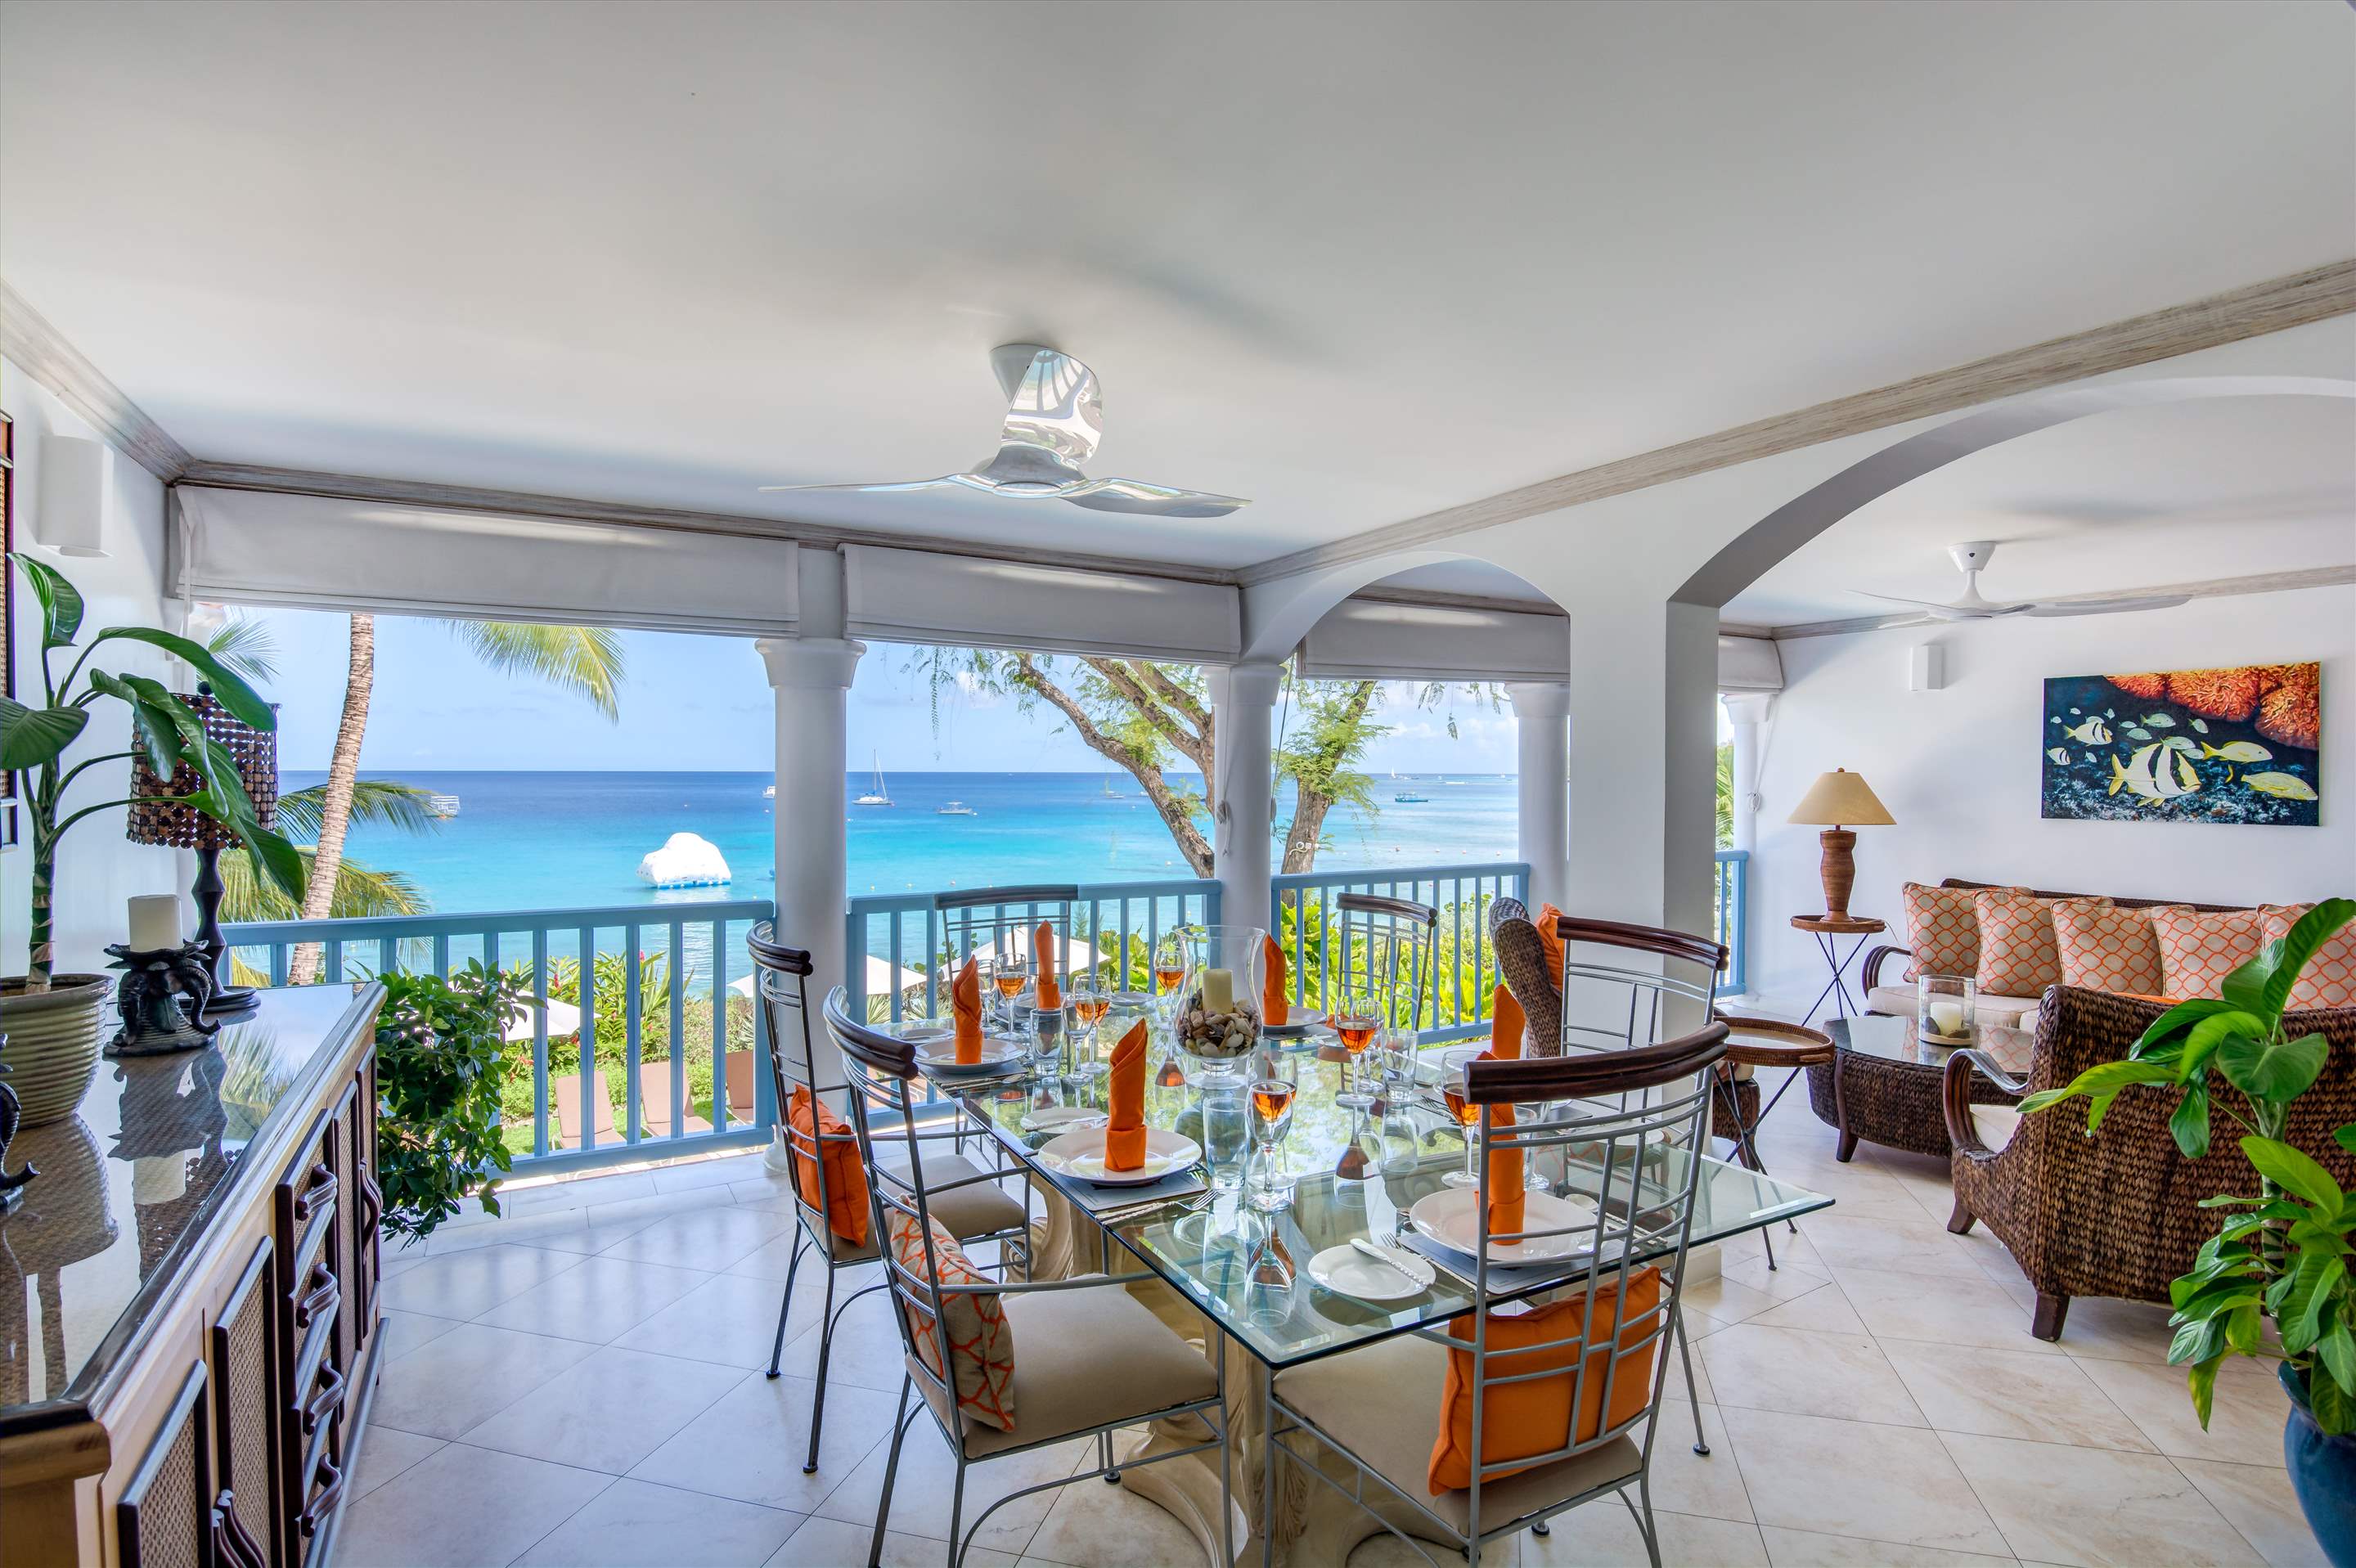 Villas on the Beach 201 , 2 bedroom, 2 bedroom apartment in St. James & West Coast, Barbados Photo #4